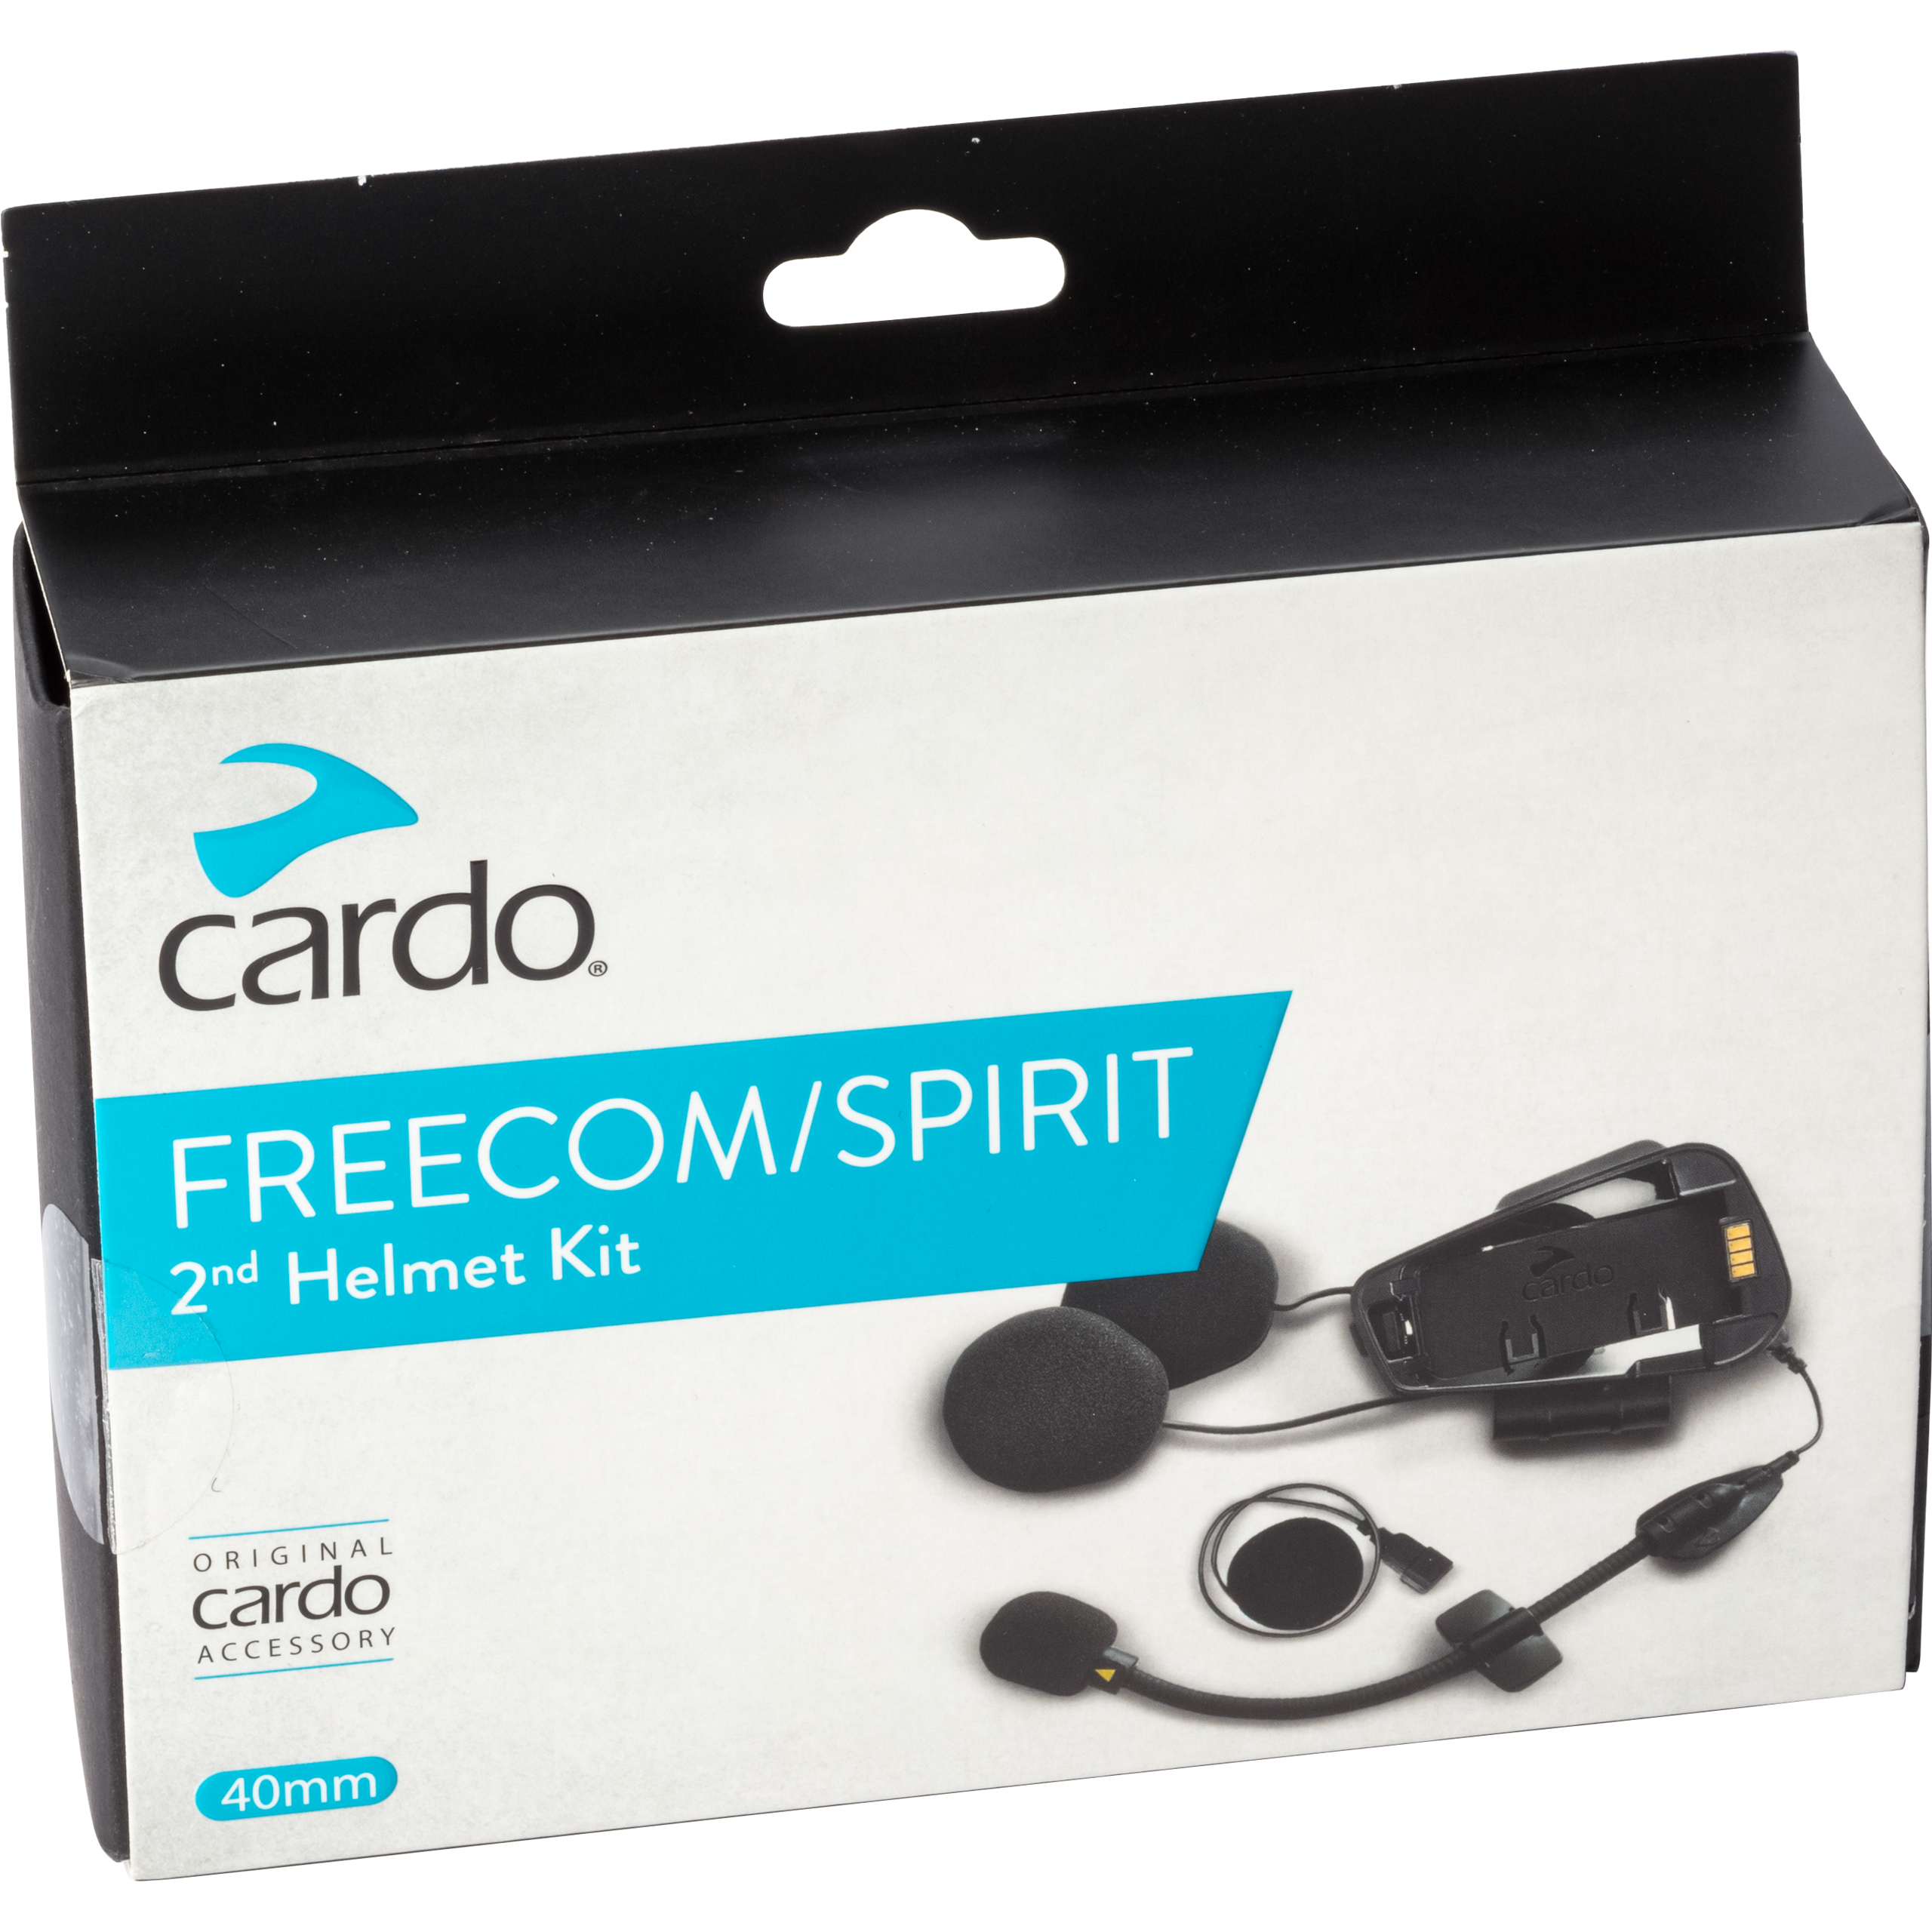 Lockitt Mobile Security & Accessories: Cardo Freecom/Spirit Half Helmet Kit